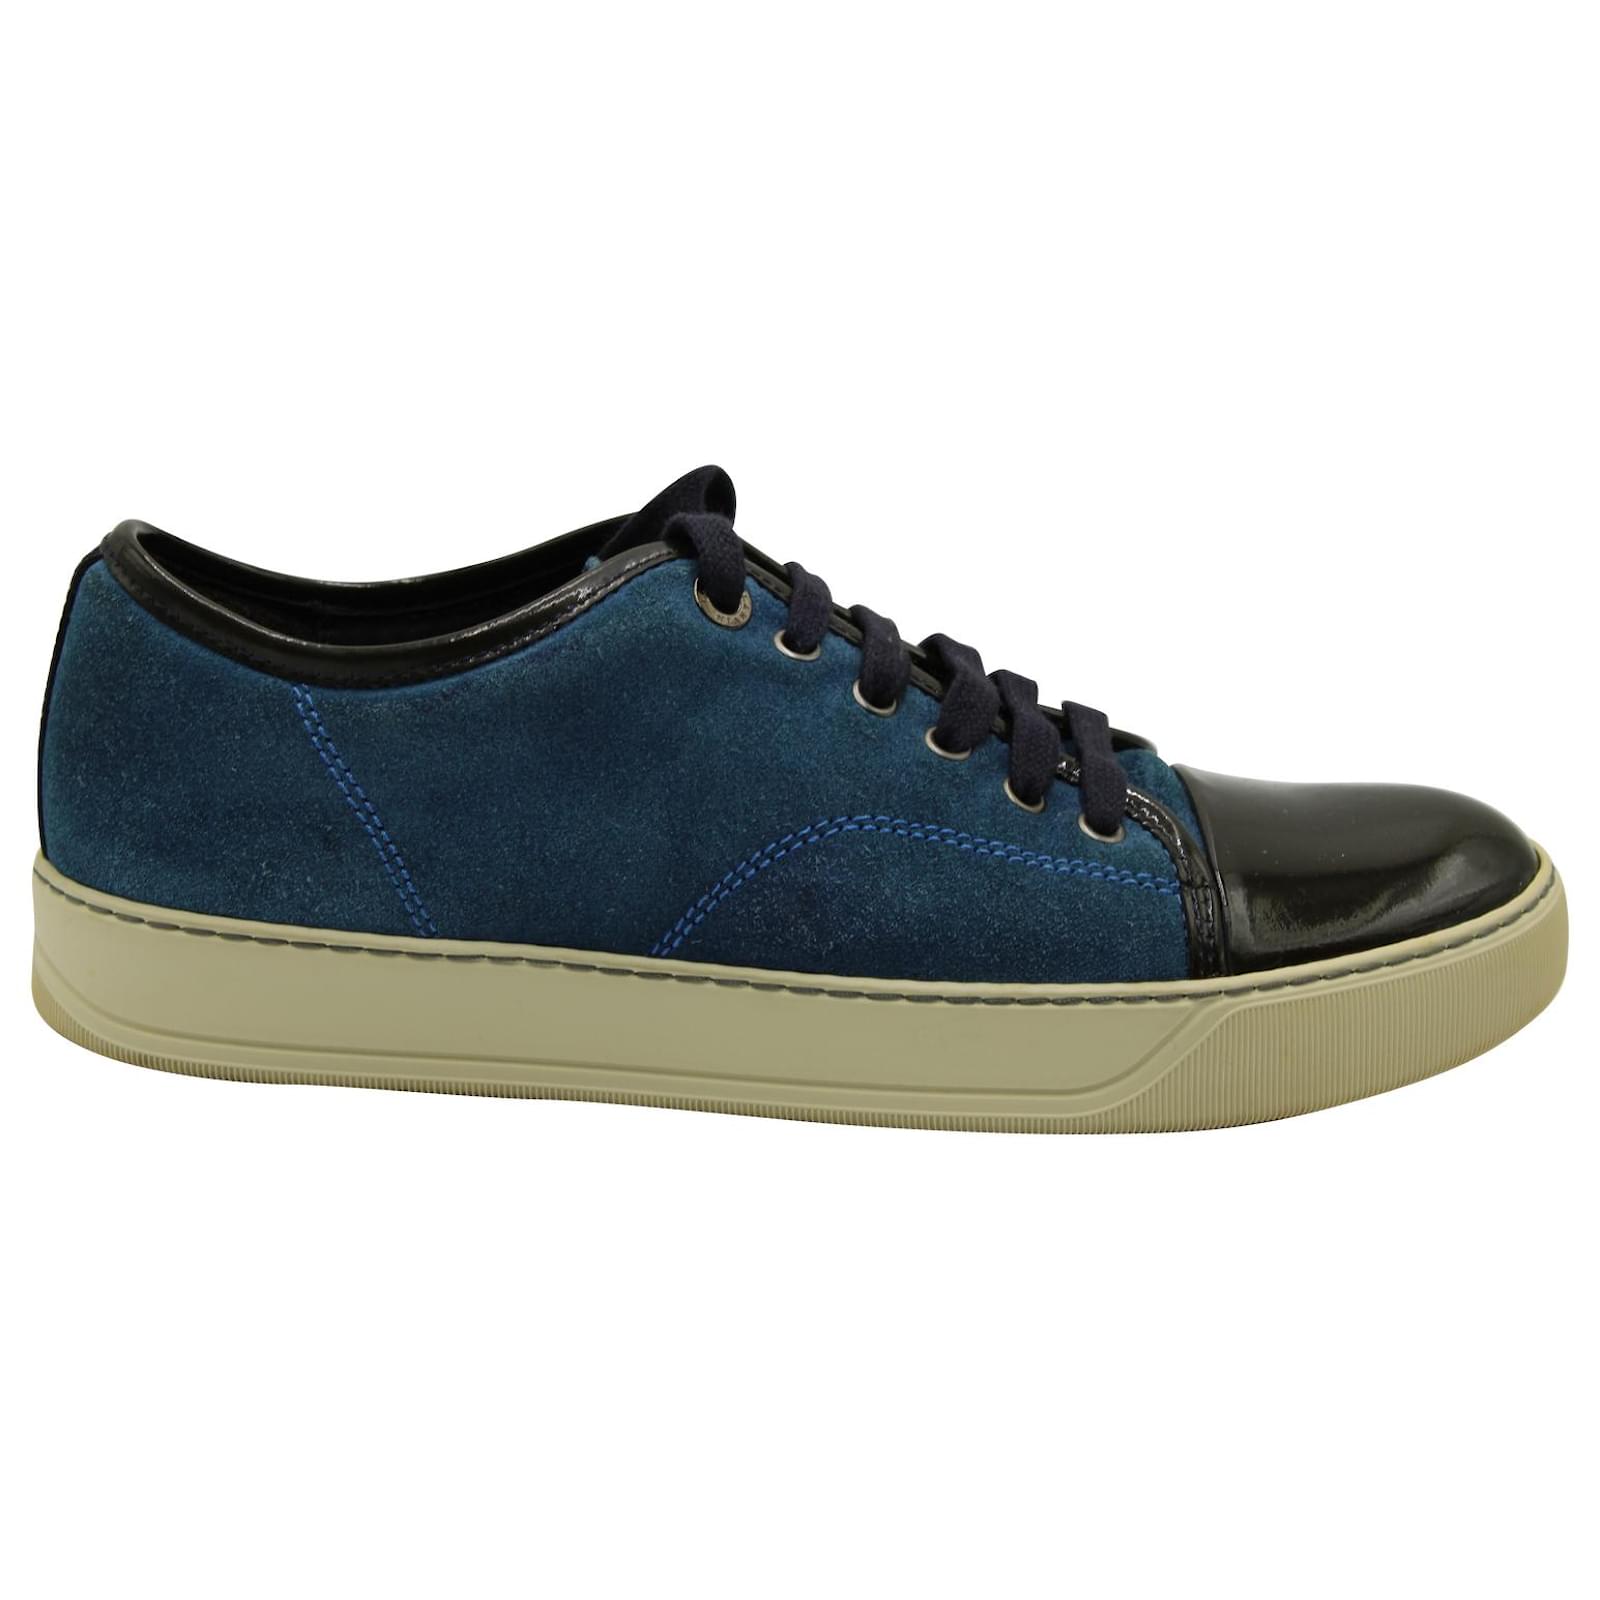 Lanvin Low Top Patent Cap Toe Sneakers in Blue Suede ref.571220 - Closet